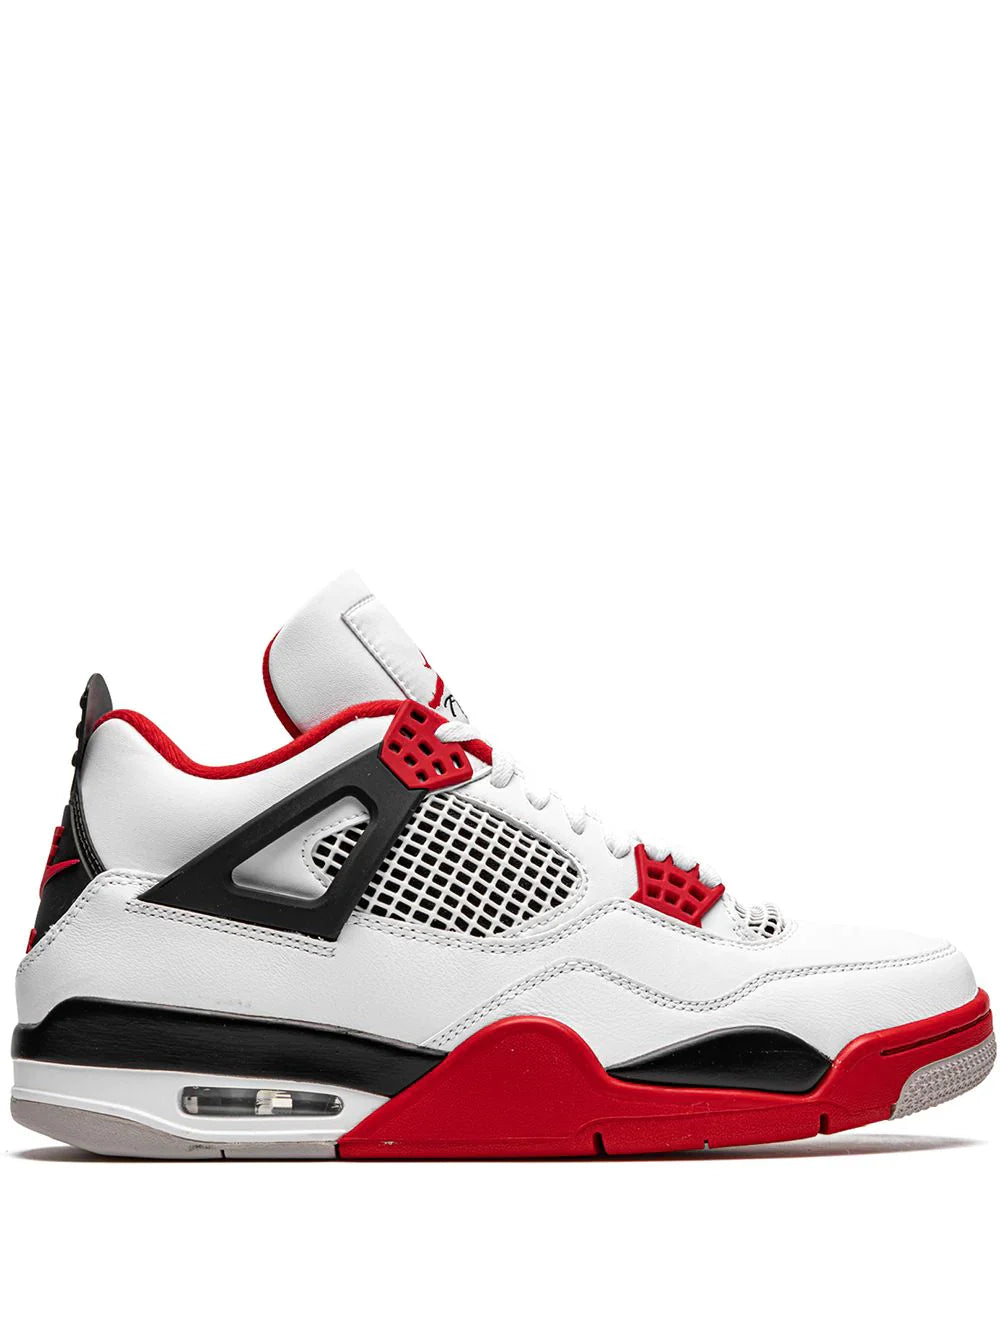 Air Jordan 4 Retro “Fire Red”